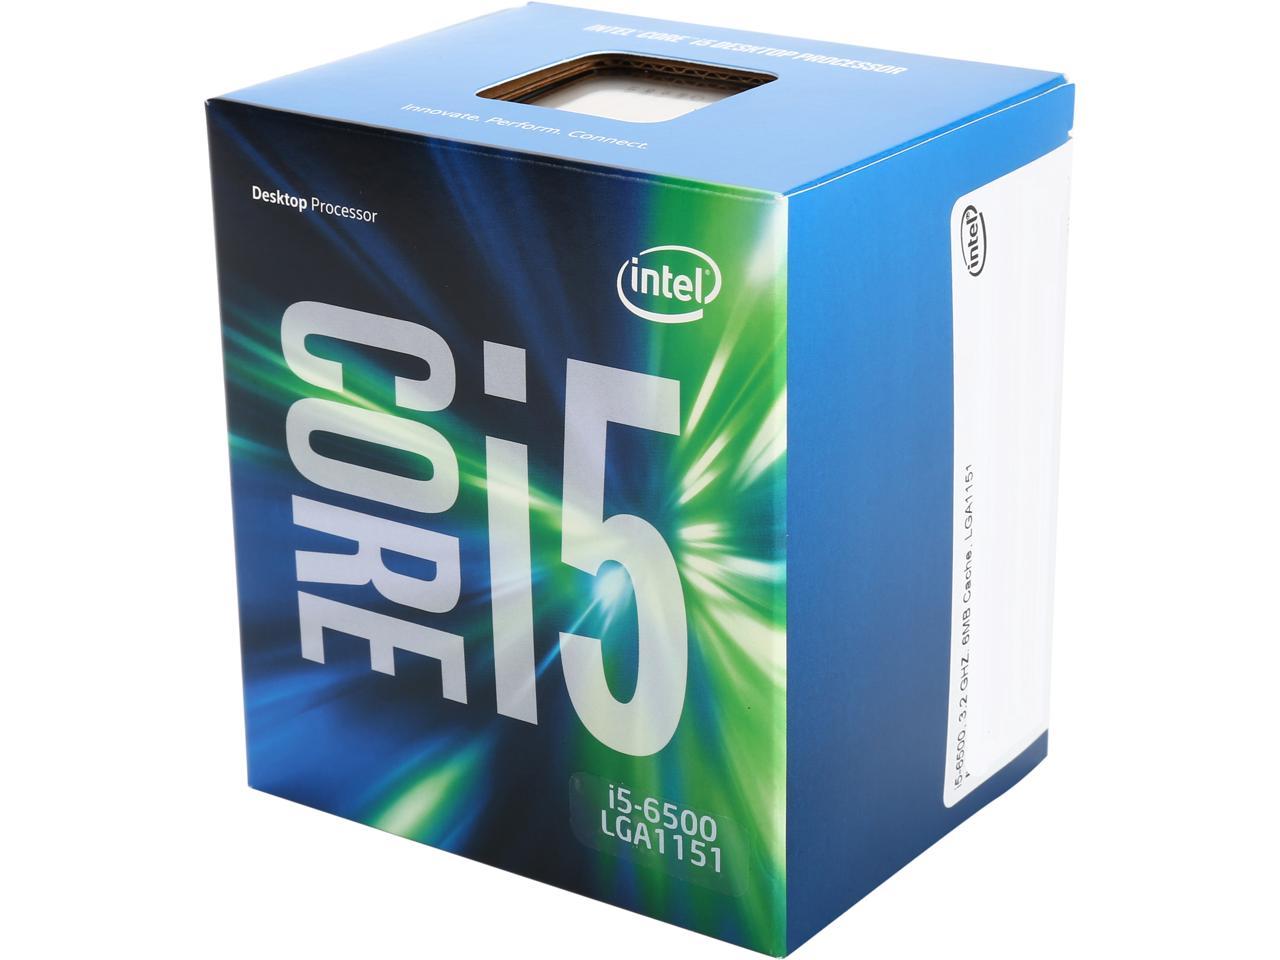 Intel Core i5-6500 - Core i5 6th Gen Skylake Quad-Core 3.2 GHz LGA 